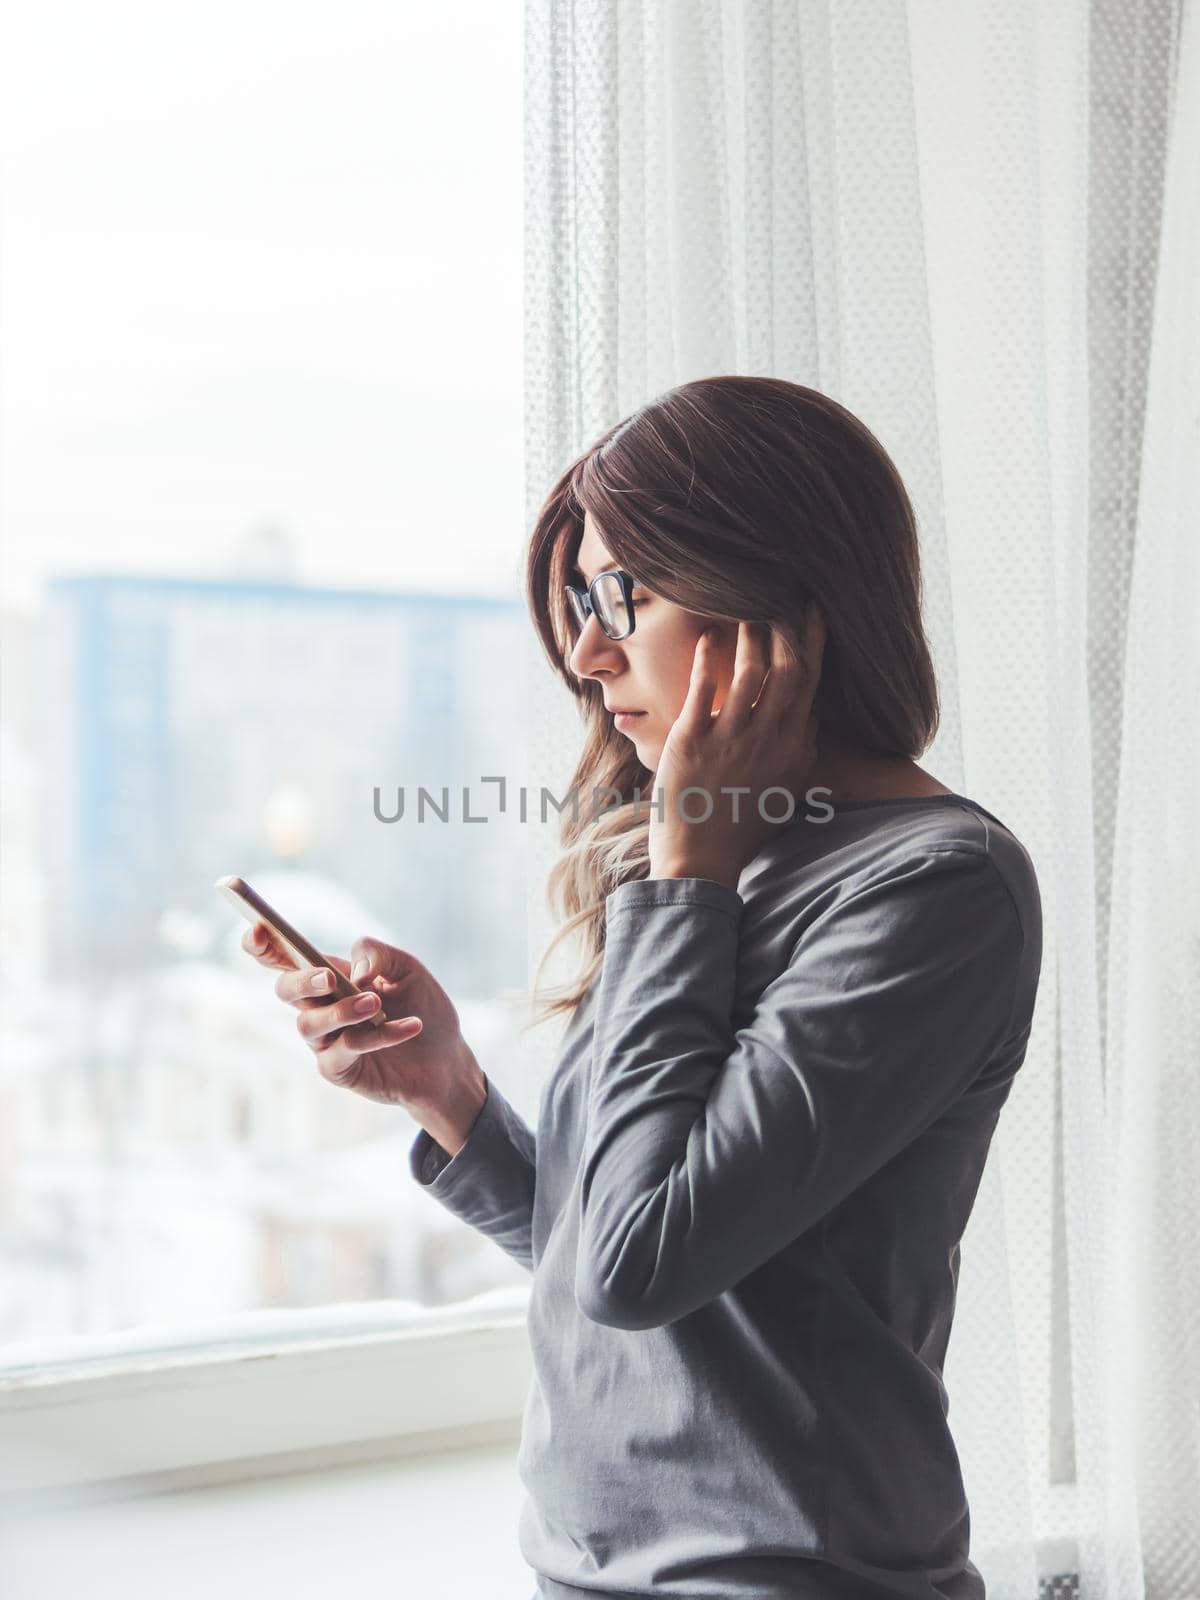 Thoughtful woman with eyeglasses looks at her smartphone. Information in online media. Wireless headphones under hair. by aksenovko